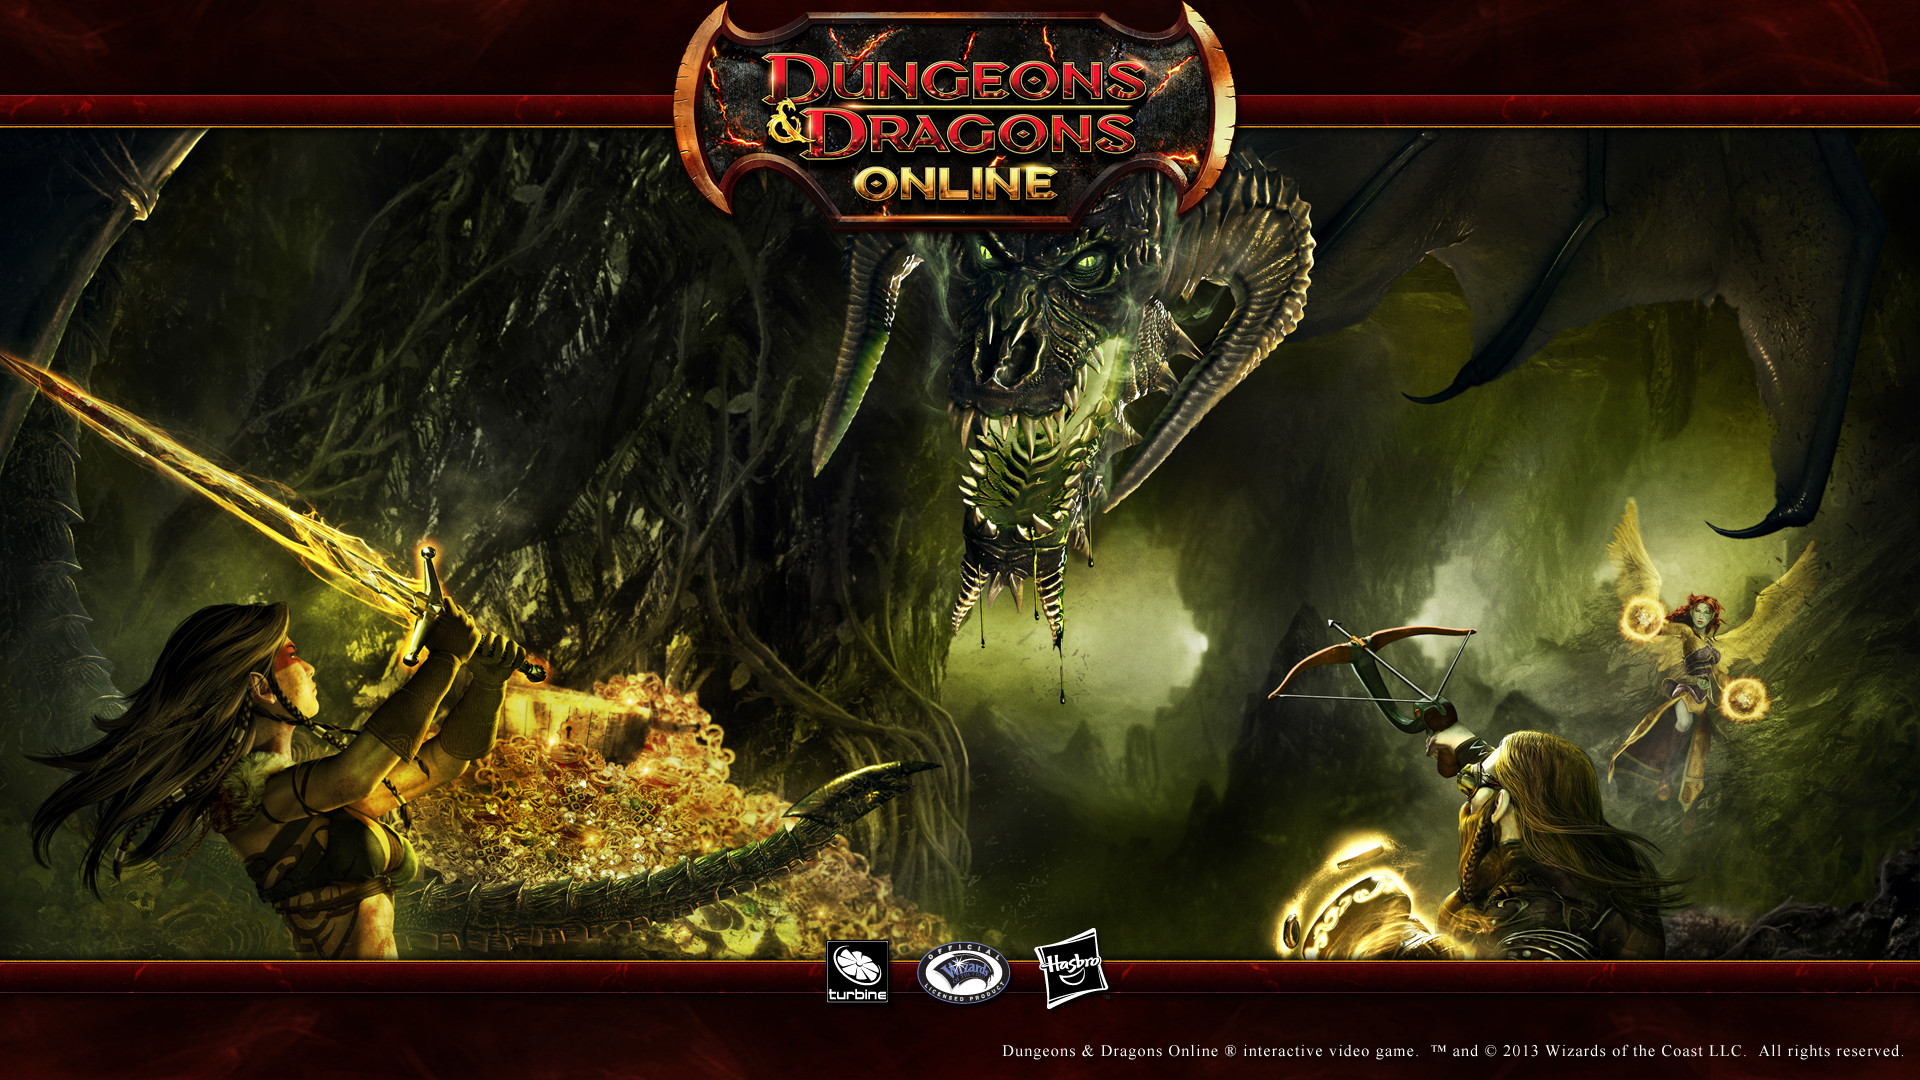 1920x1080 Dungeons & Dragons Online 16:9 Wallpaper - Black Dragon